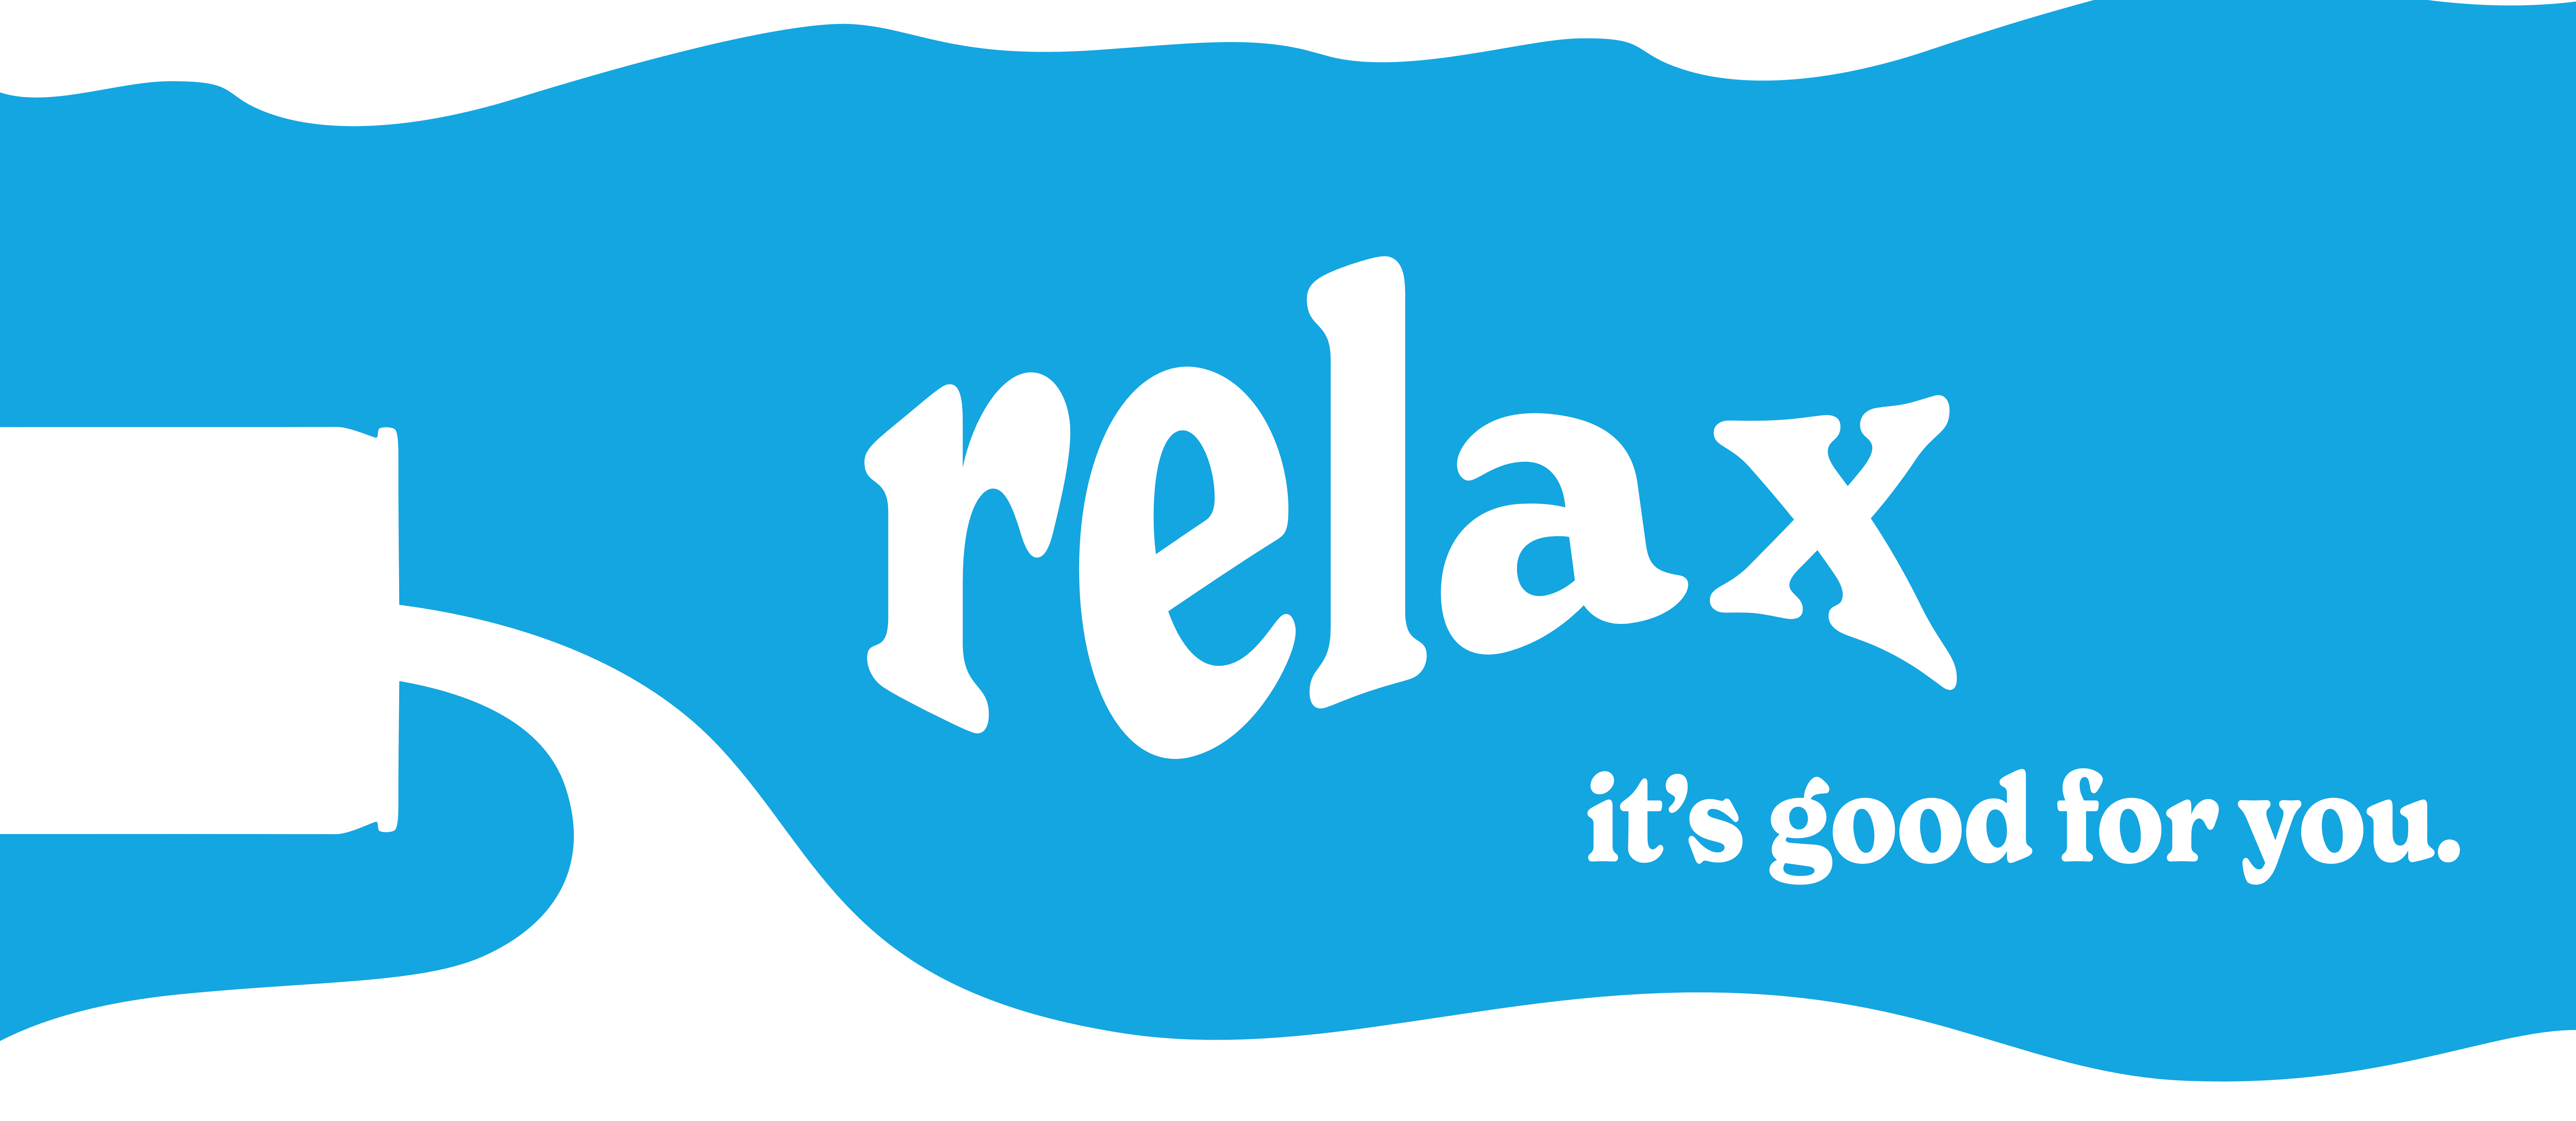 tq-relax-bg